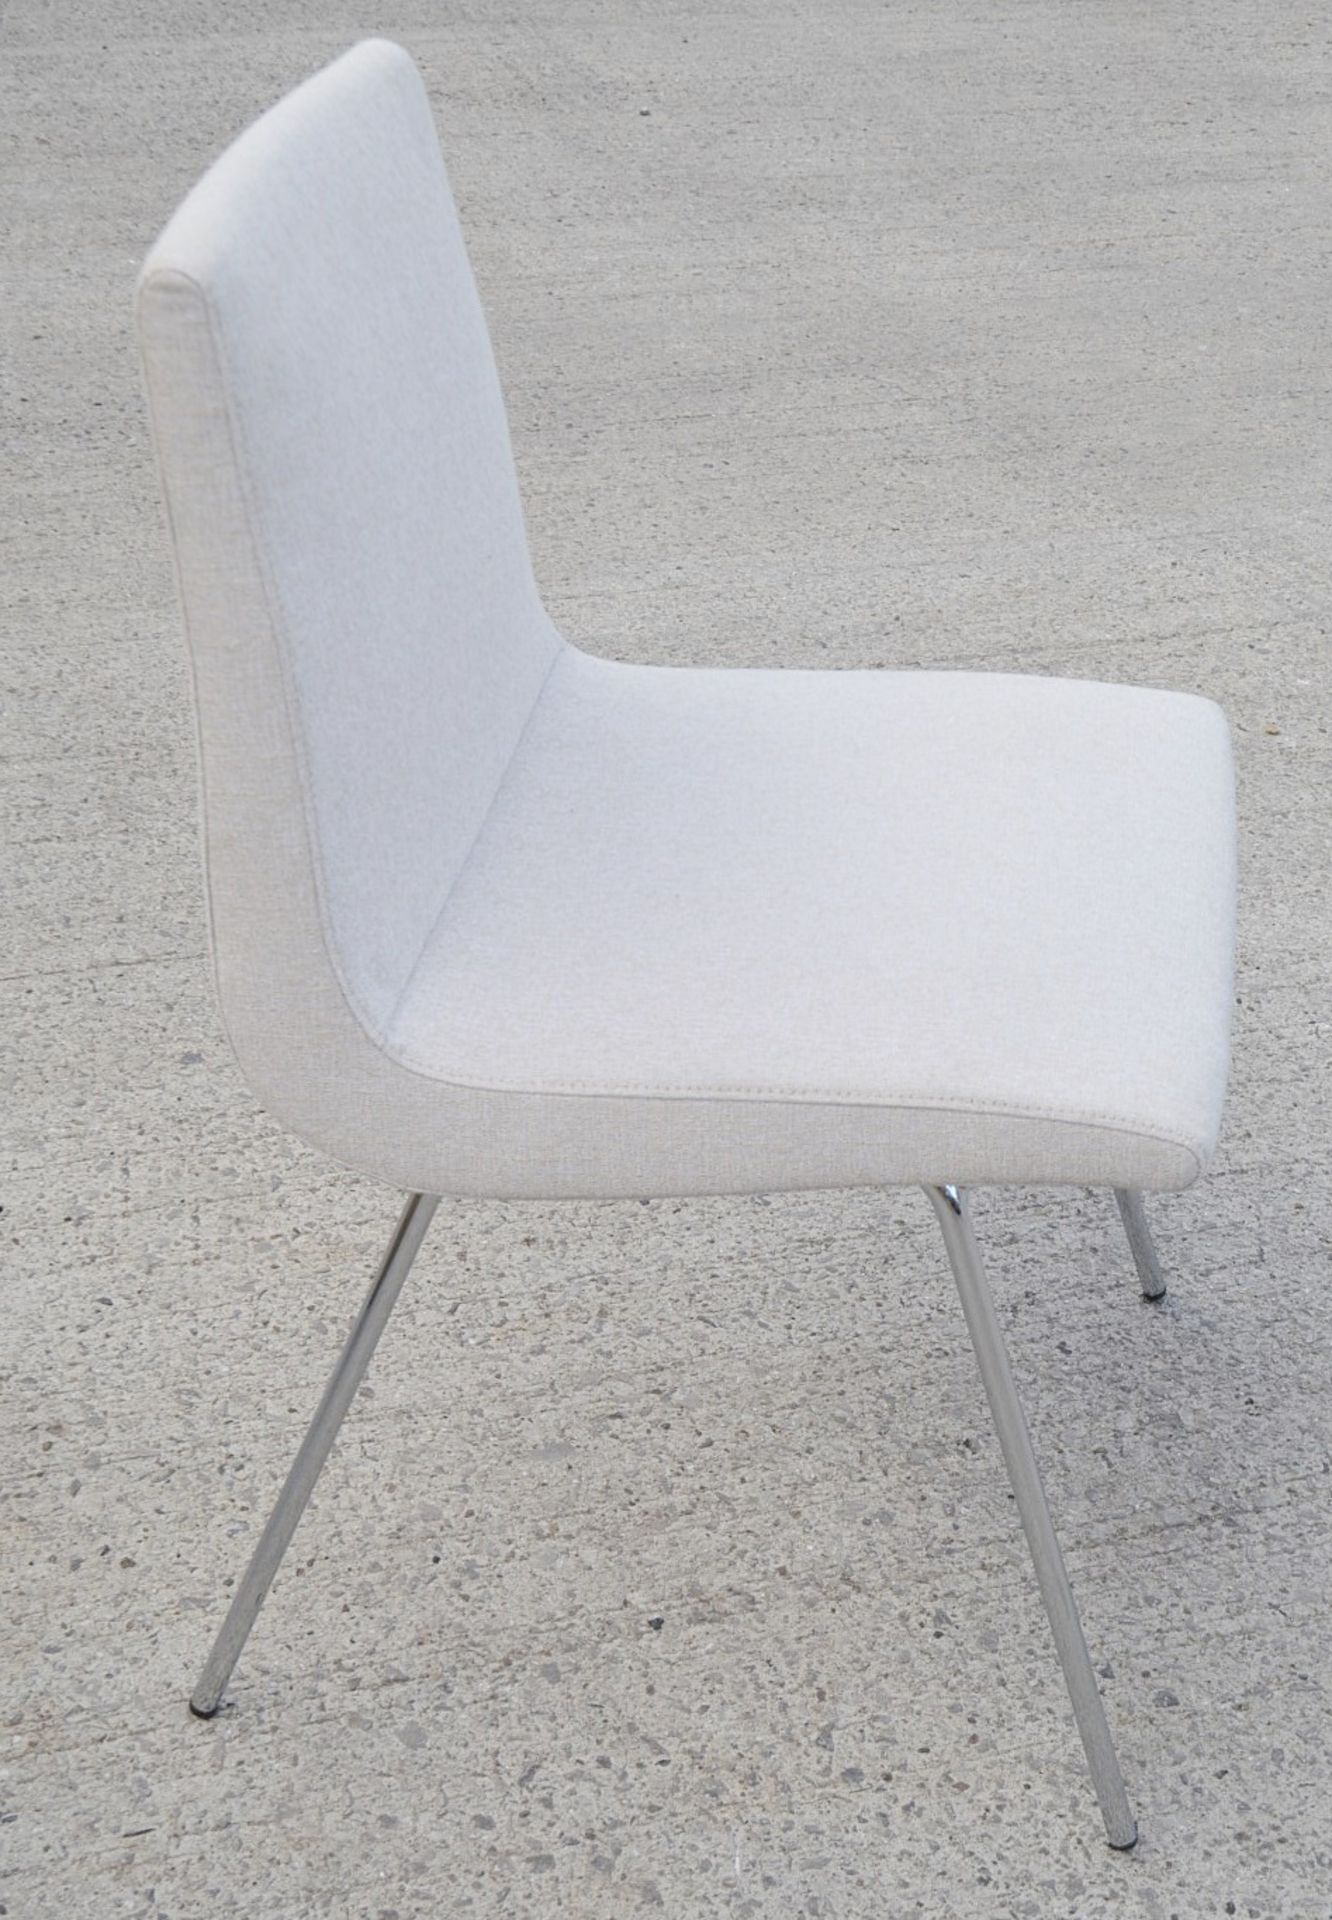 Pair Of LIGNE ROSET 'TV' Designer Dining Chairs In A Light Neutral Beige Fabric & Chromed Steel Legs - Image 7 of 9